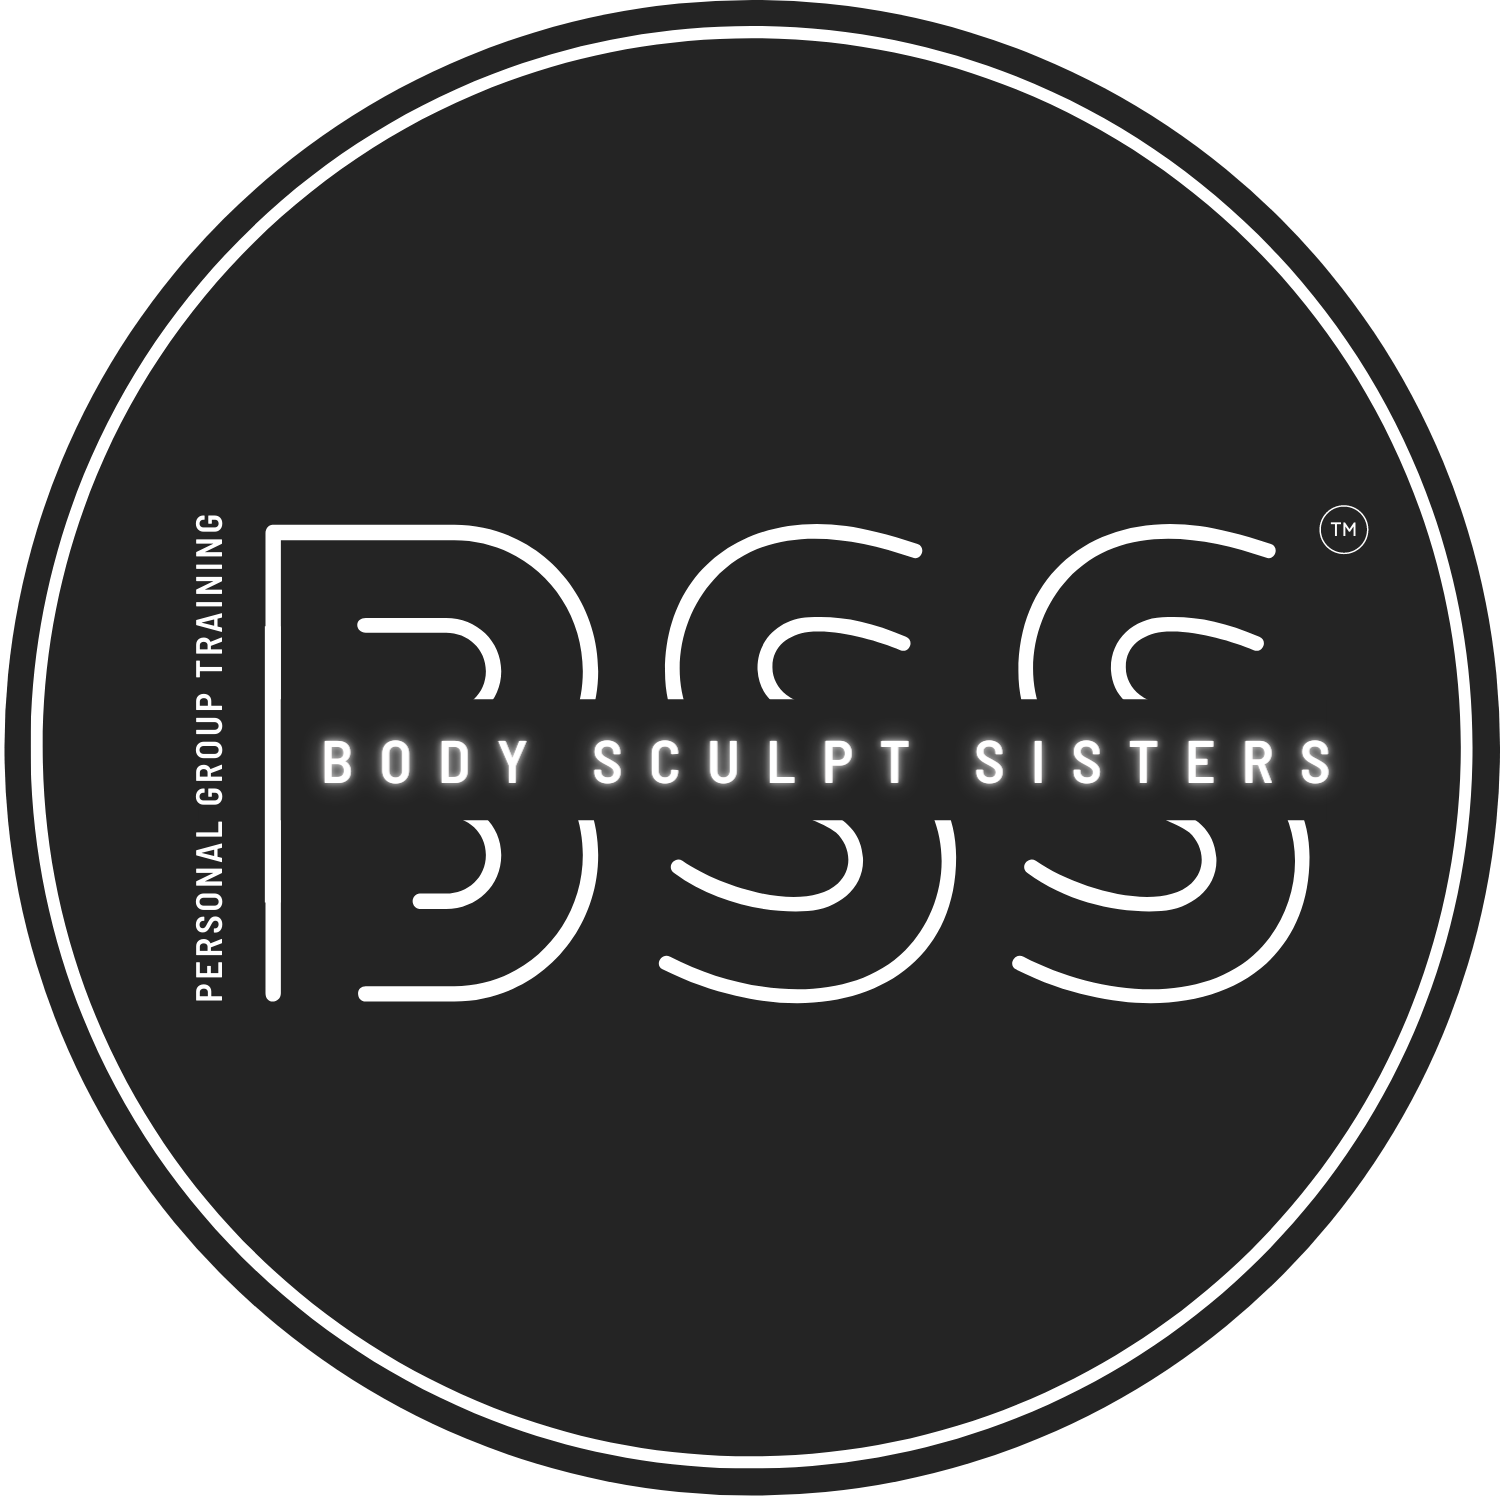 BodySculptSisters